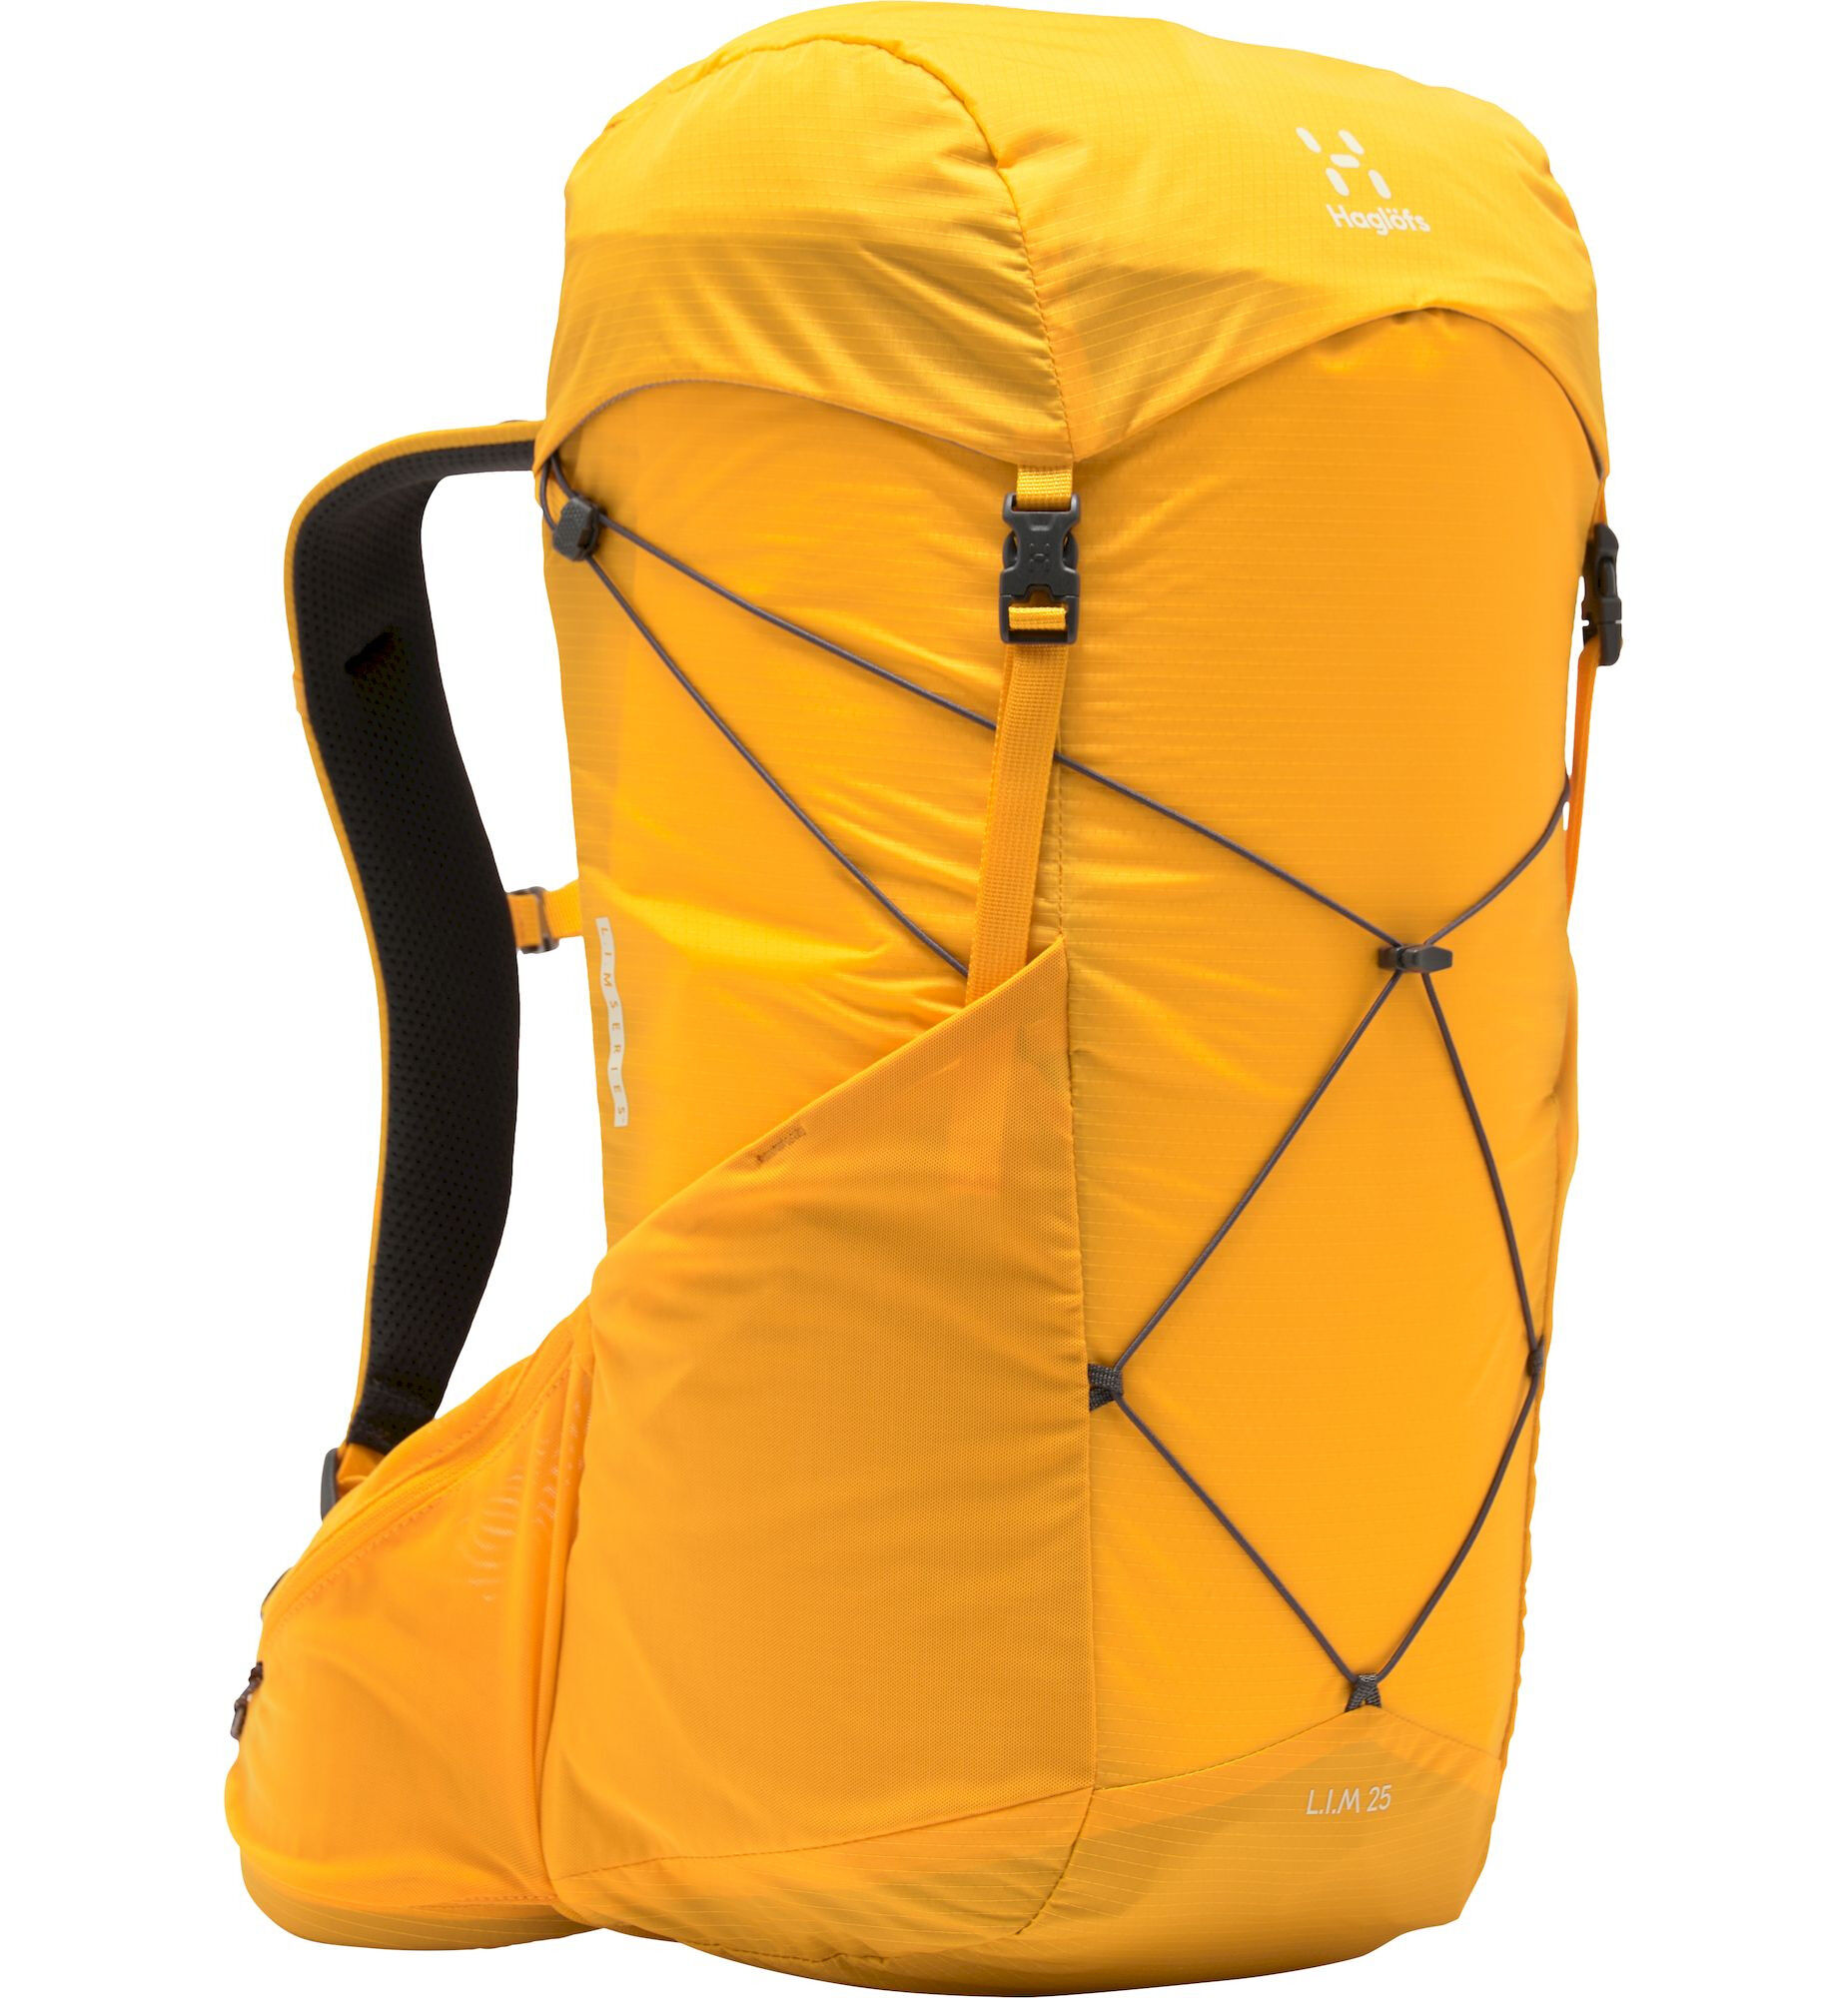 Haglöfs L.I.M 25 - Hiking backpack